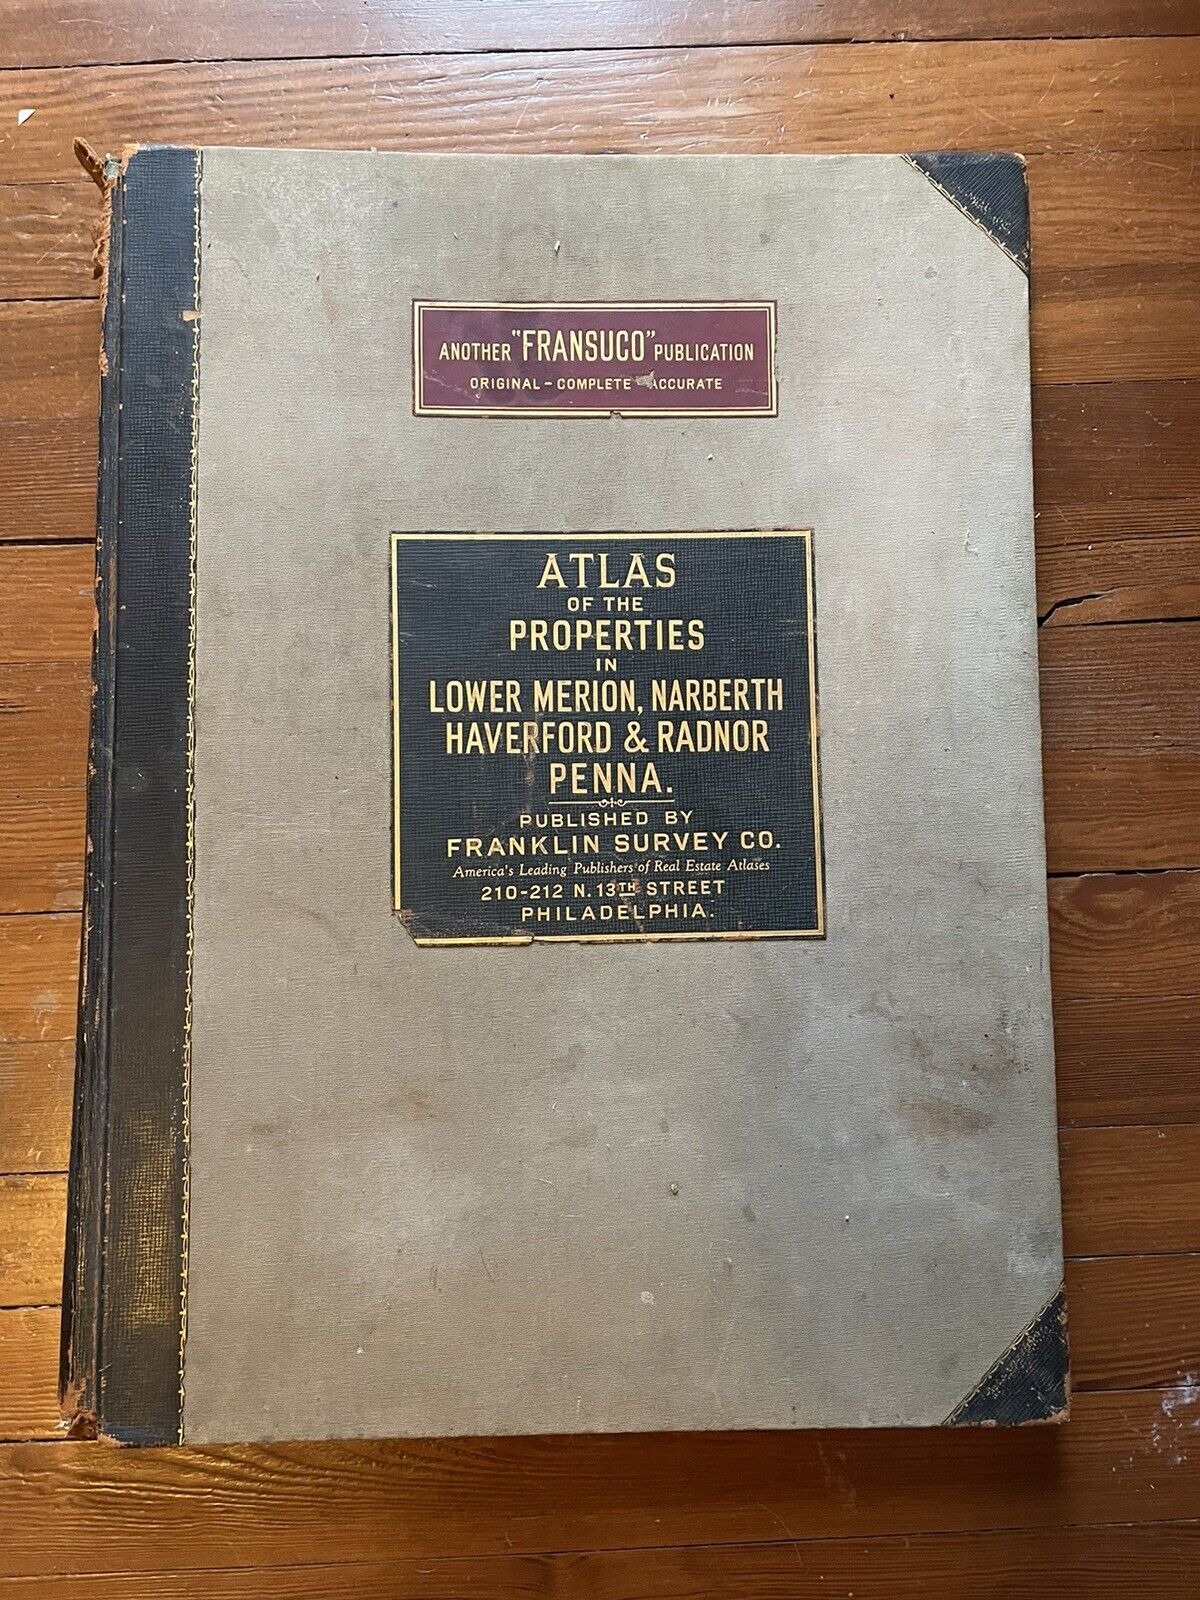 Scarce 1937 Properties of the Main Line Atlas.35 Maps.18x24”. Franklin Survey Co